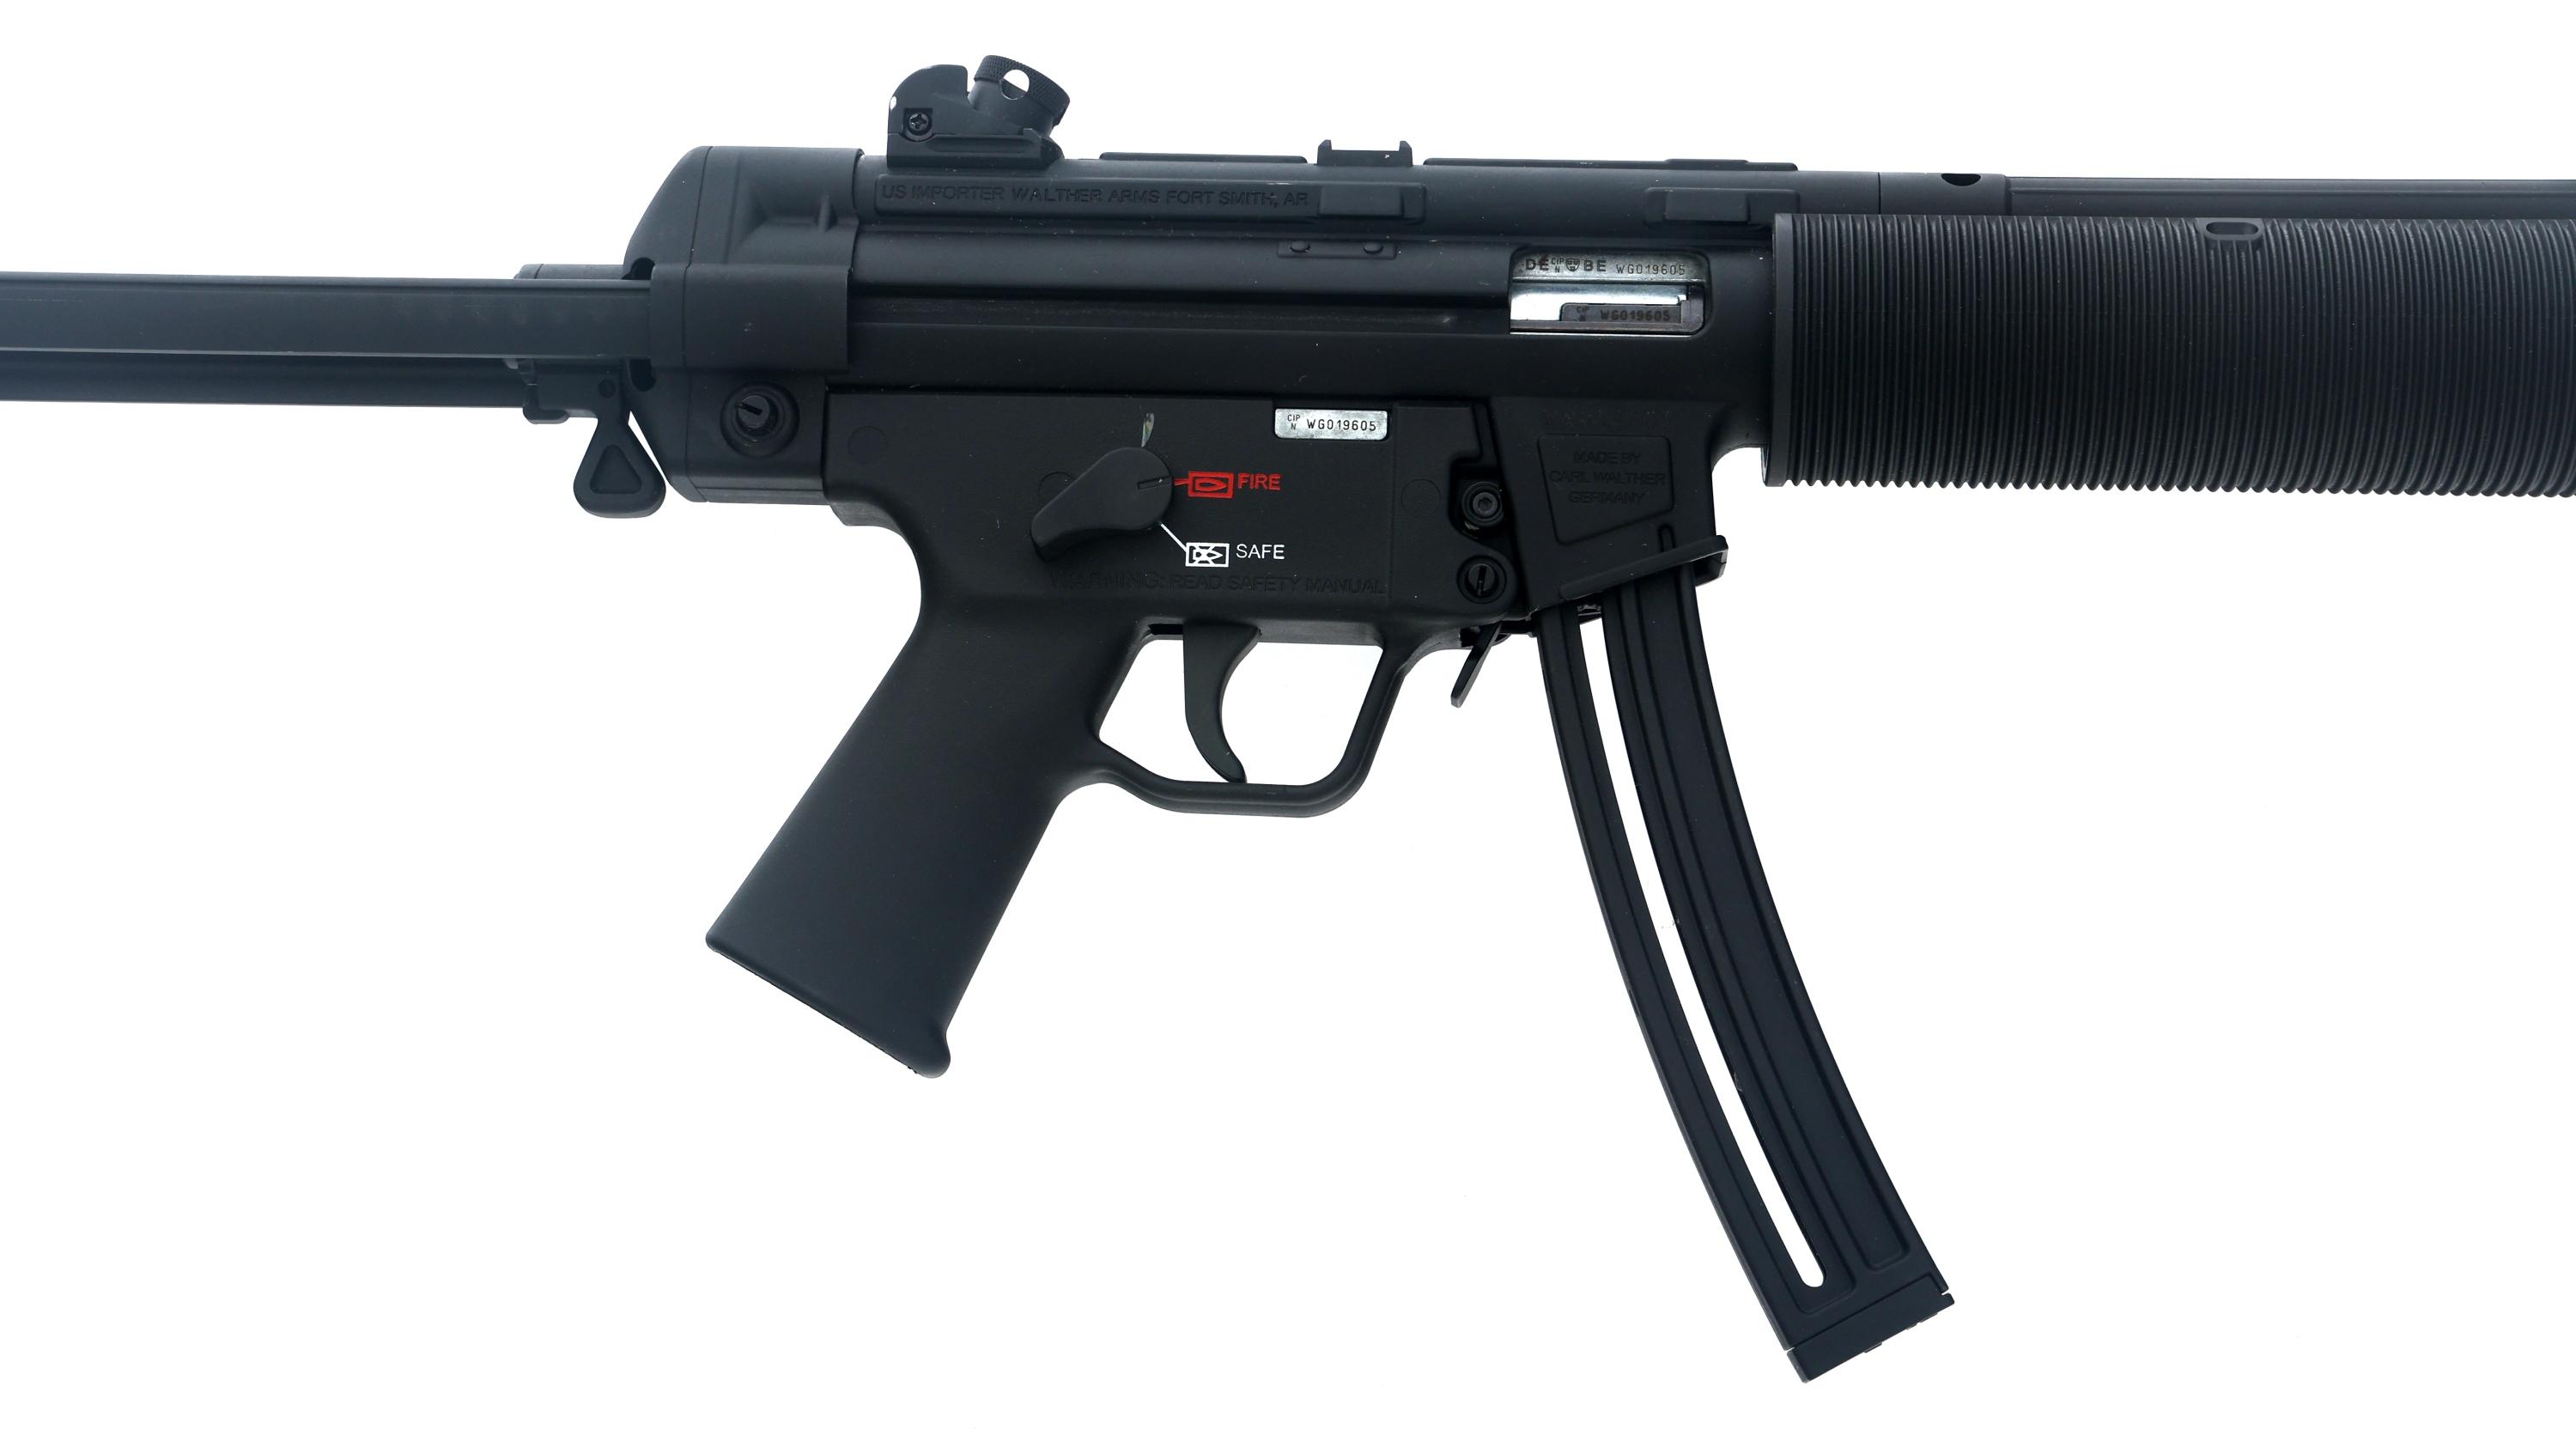 WALTHER MODEL HK MP5 SD6 .22 LR CALIBER RIFLE